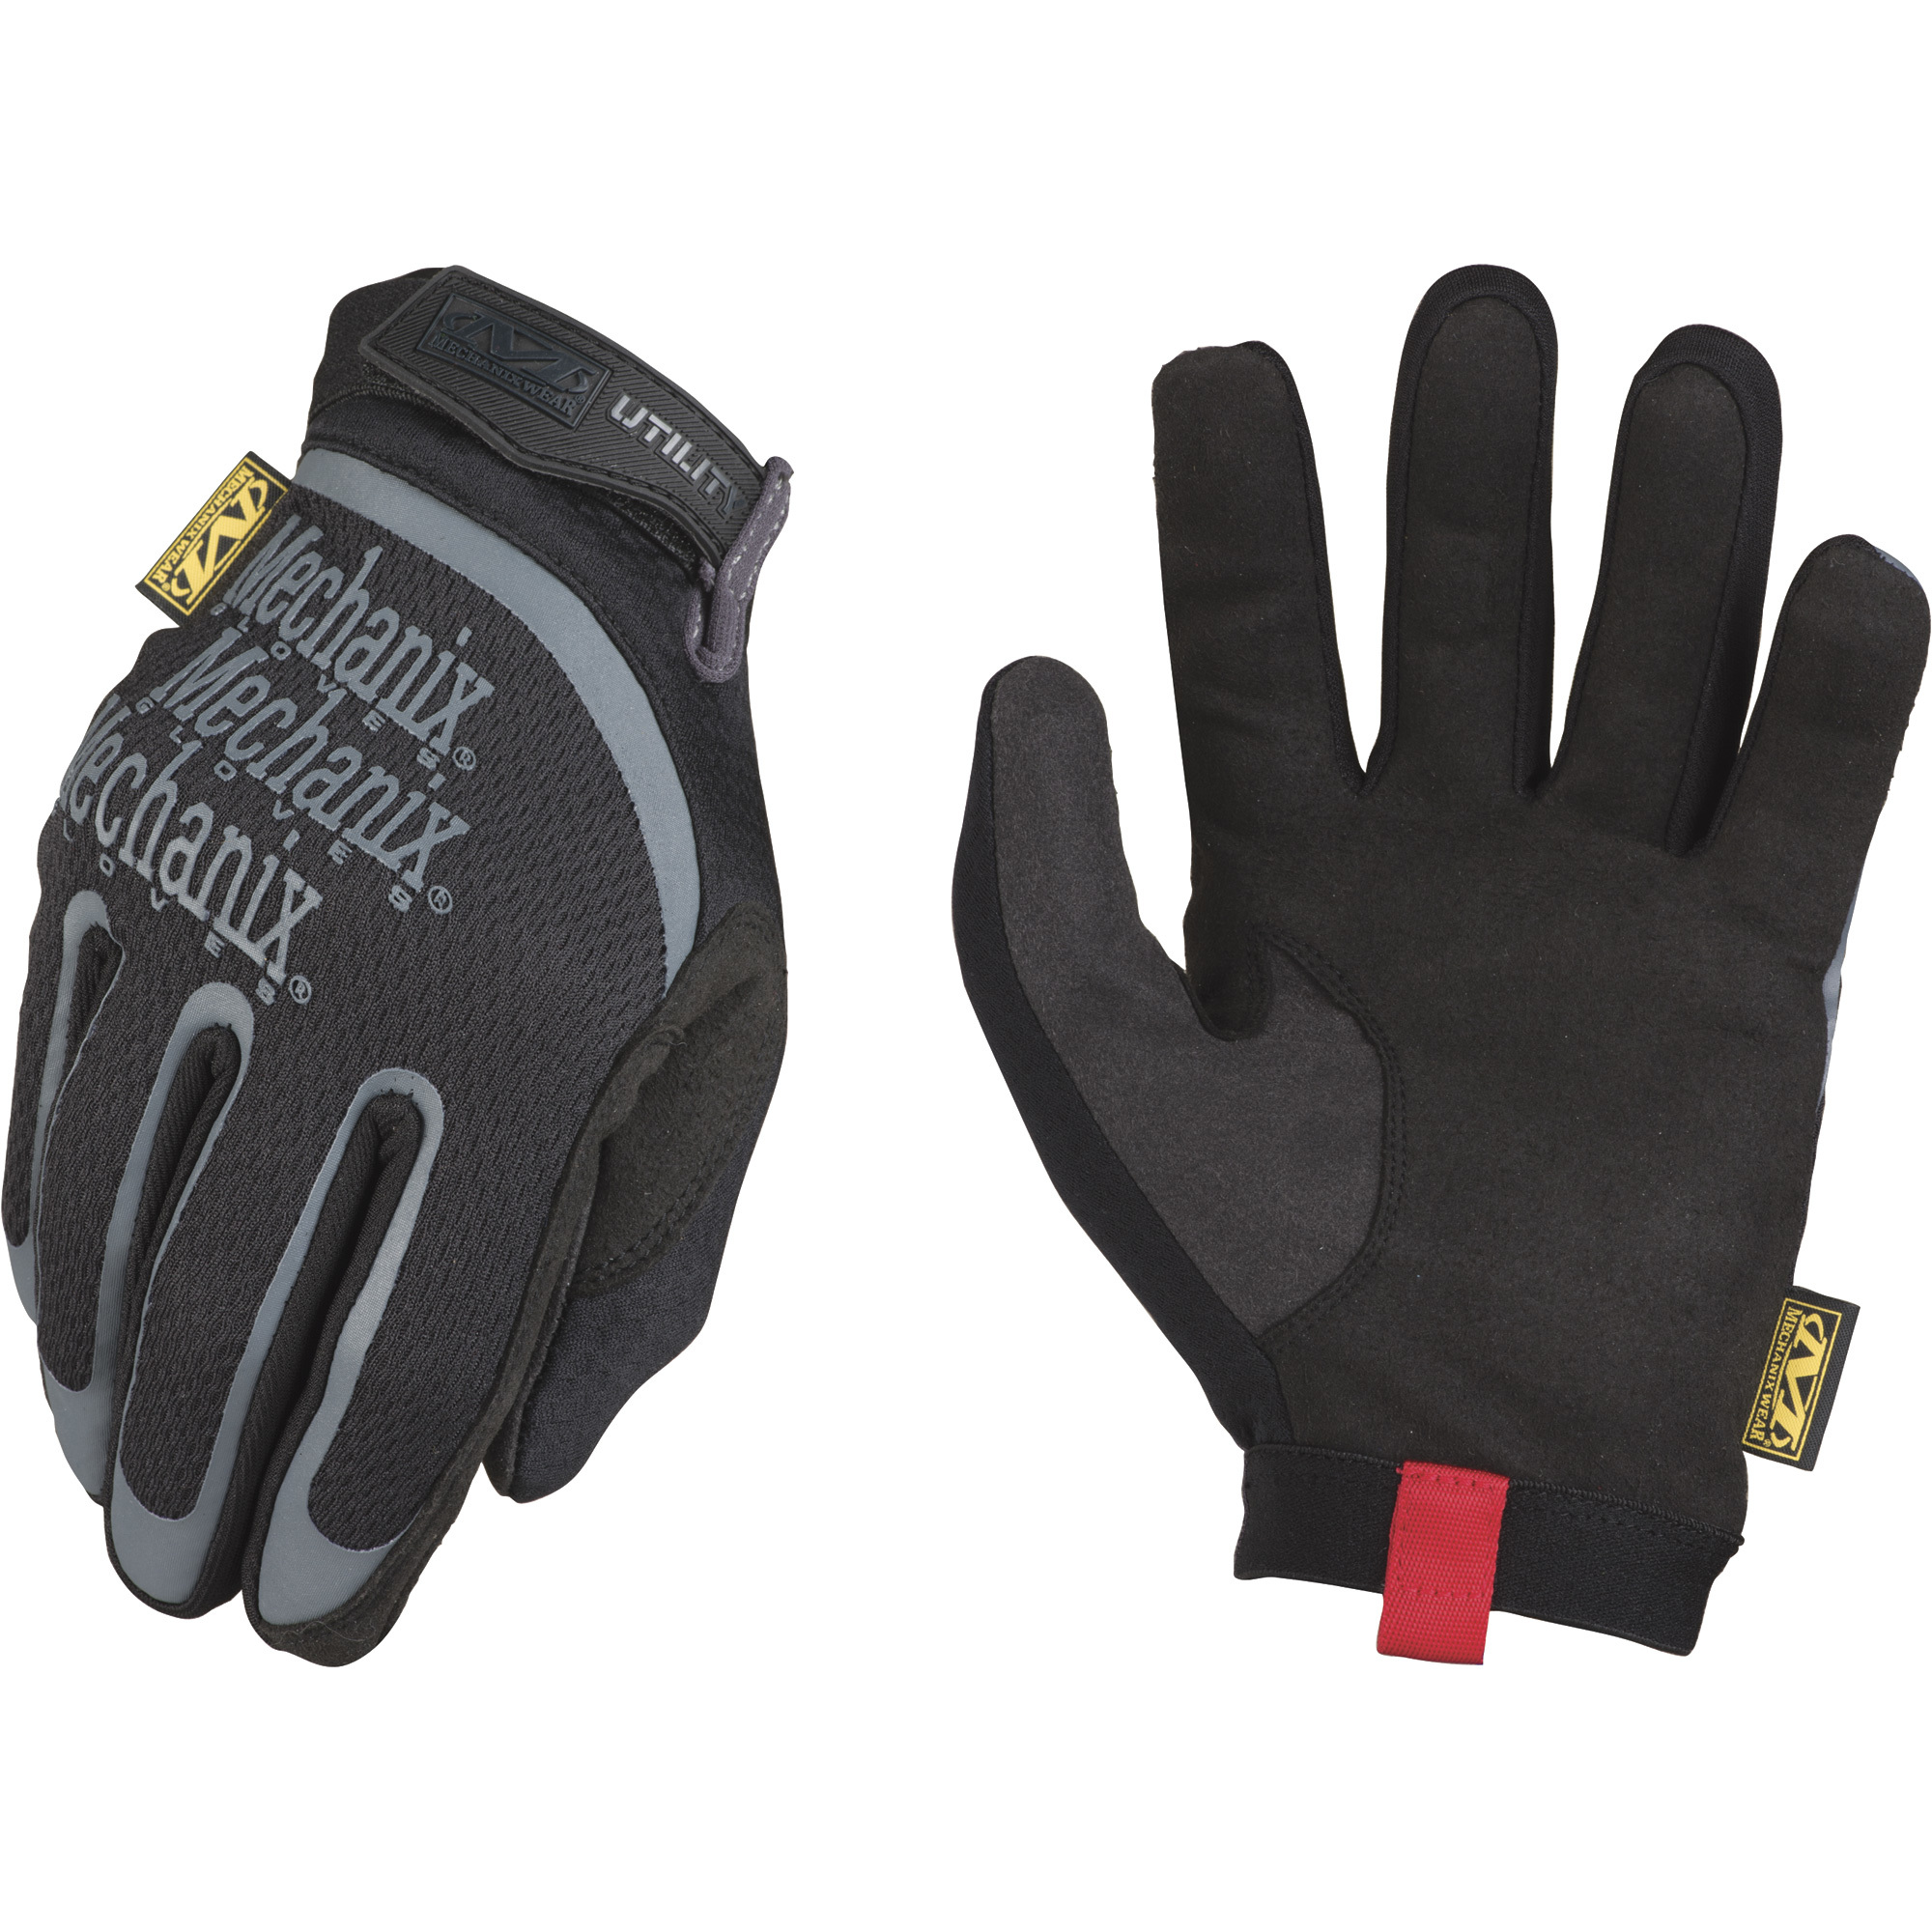 Mechanix Men's Wear Utility 1.5 Gloves - Black, X-Large, Model H15-05-011